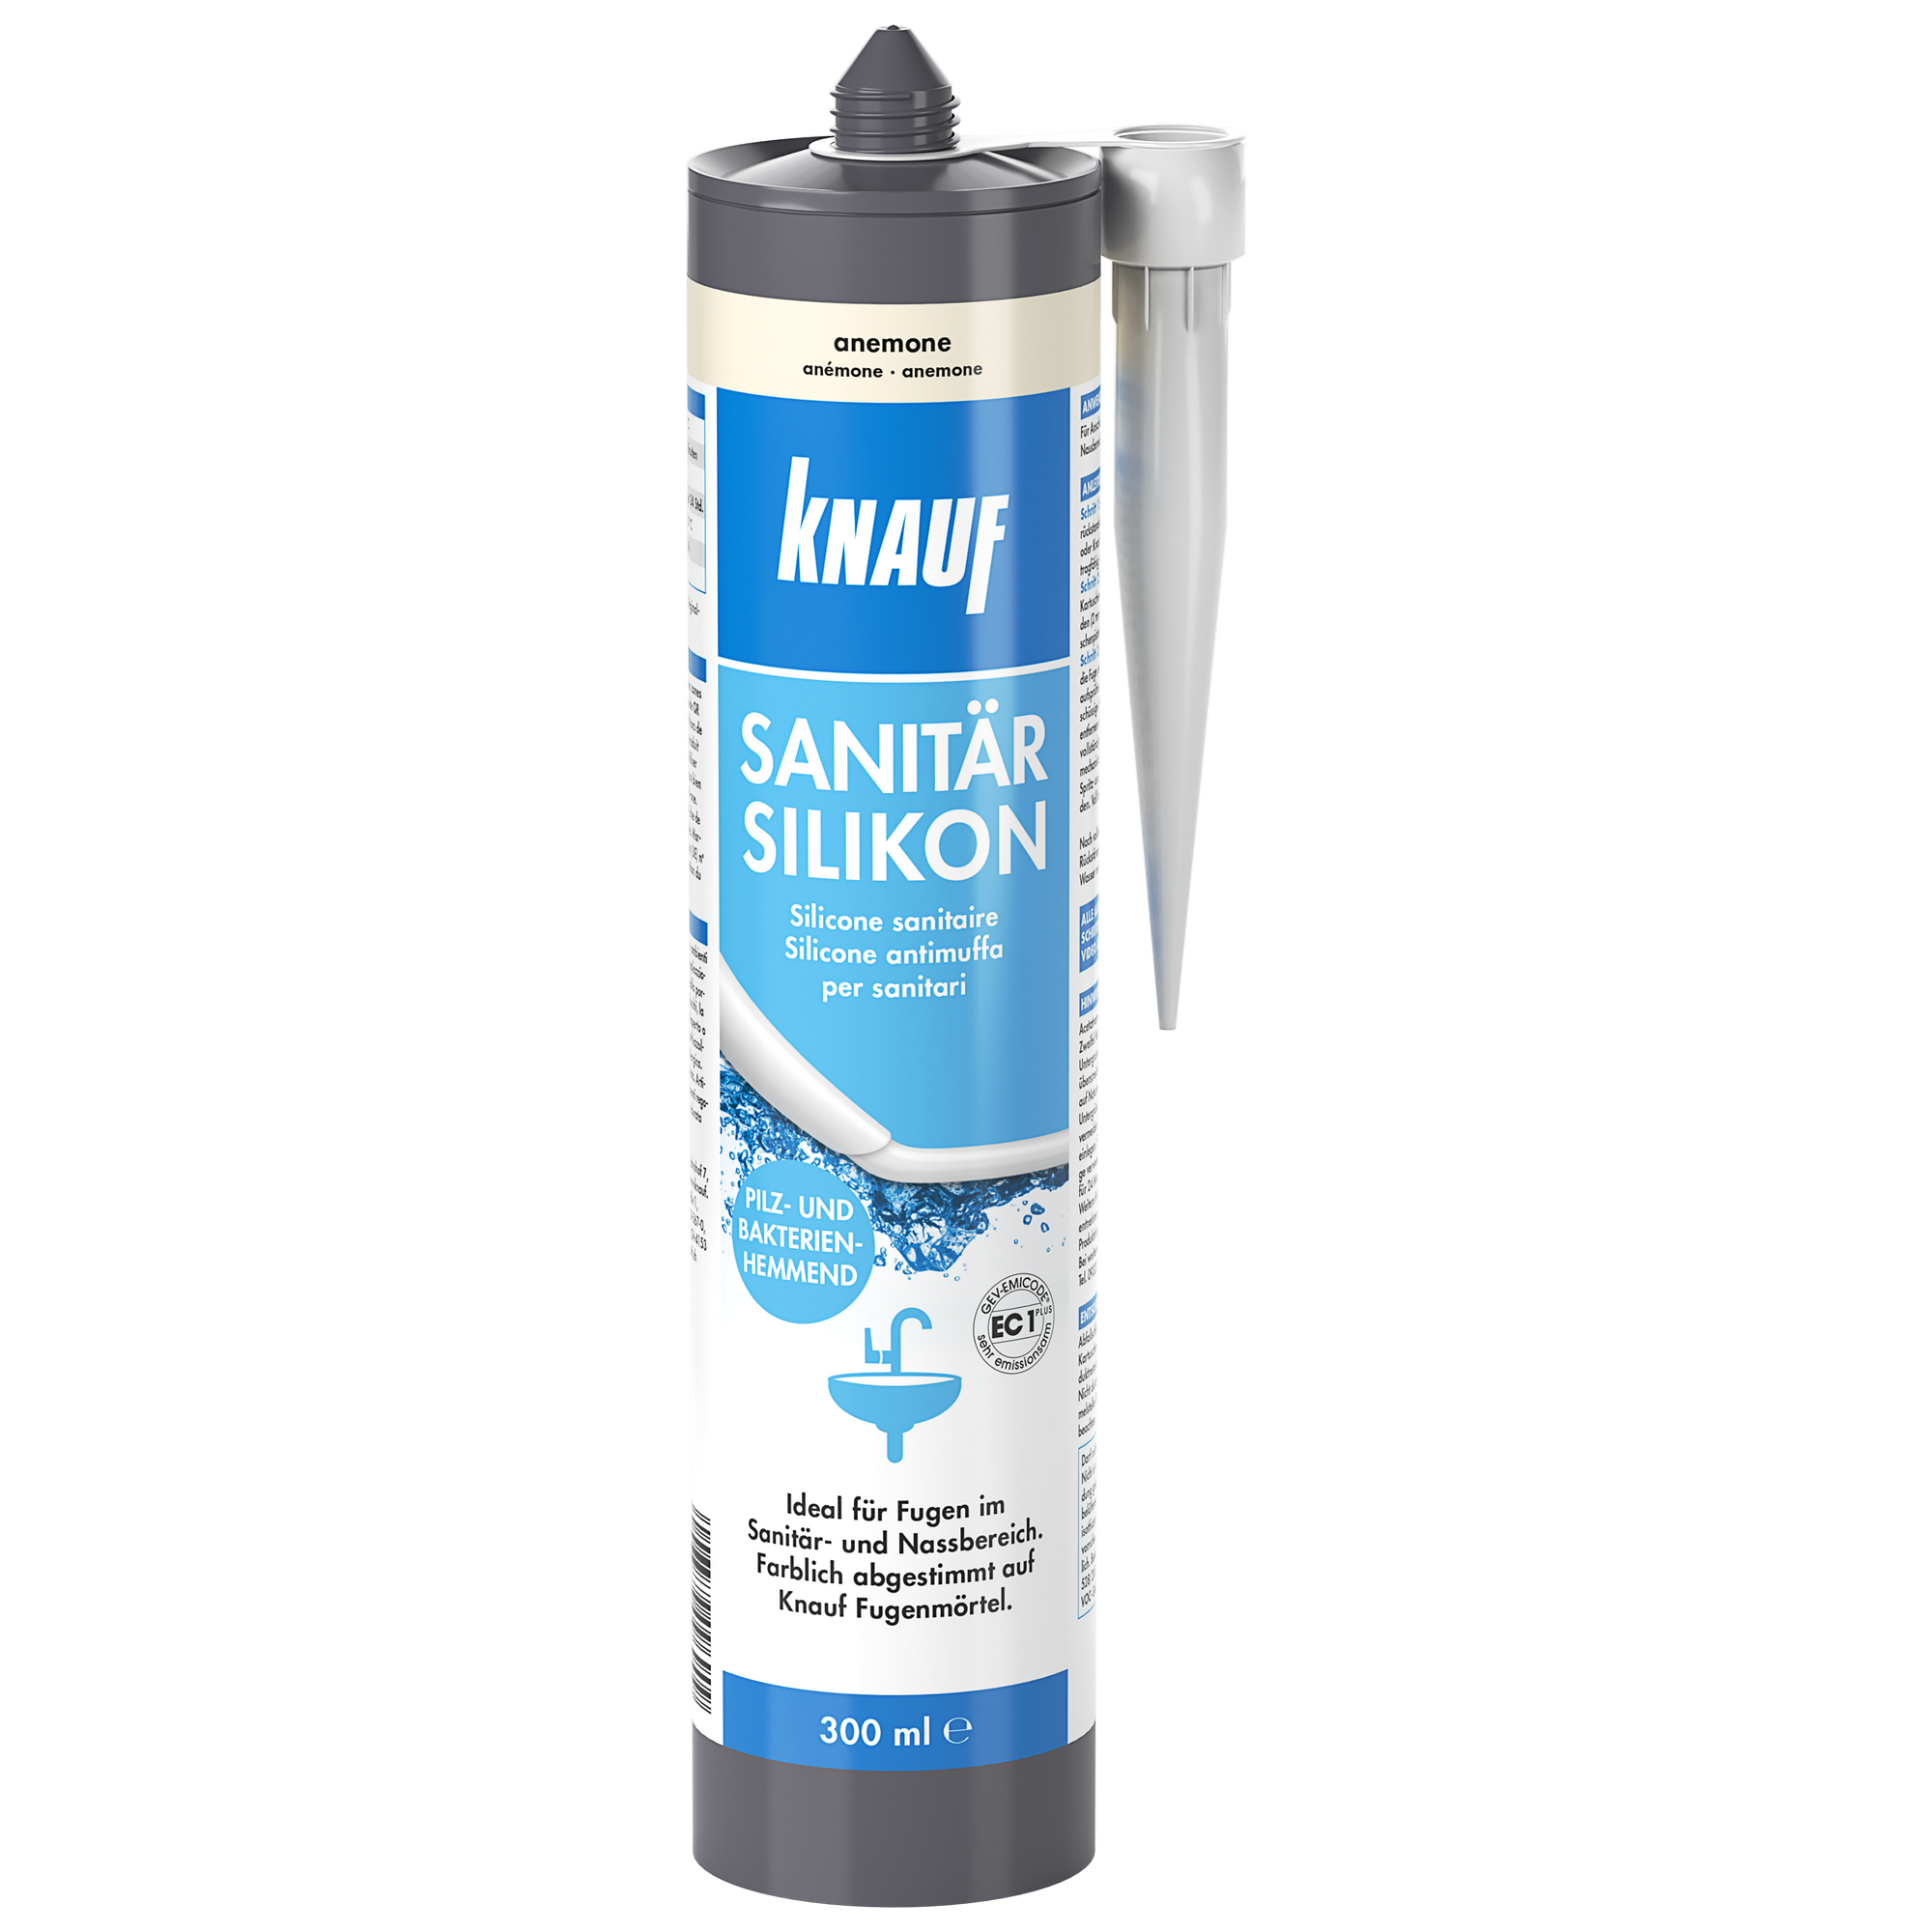 Sanitärsilikon anemone 300 ml + product picture